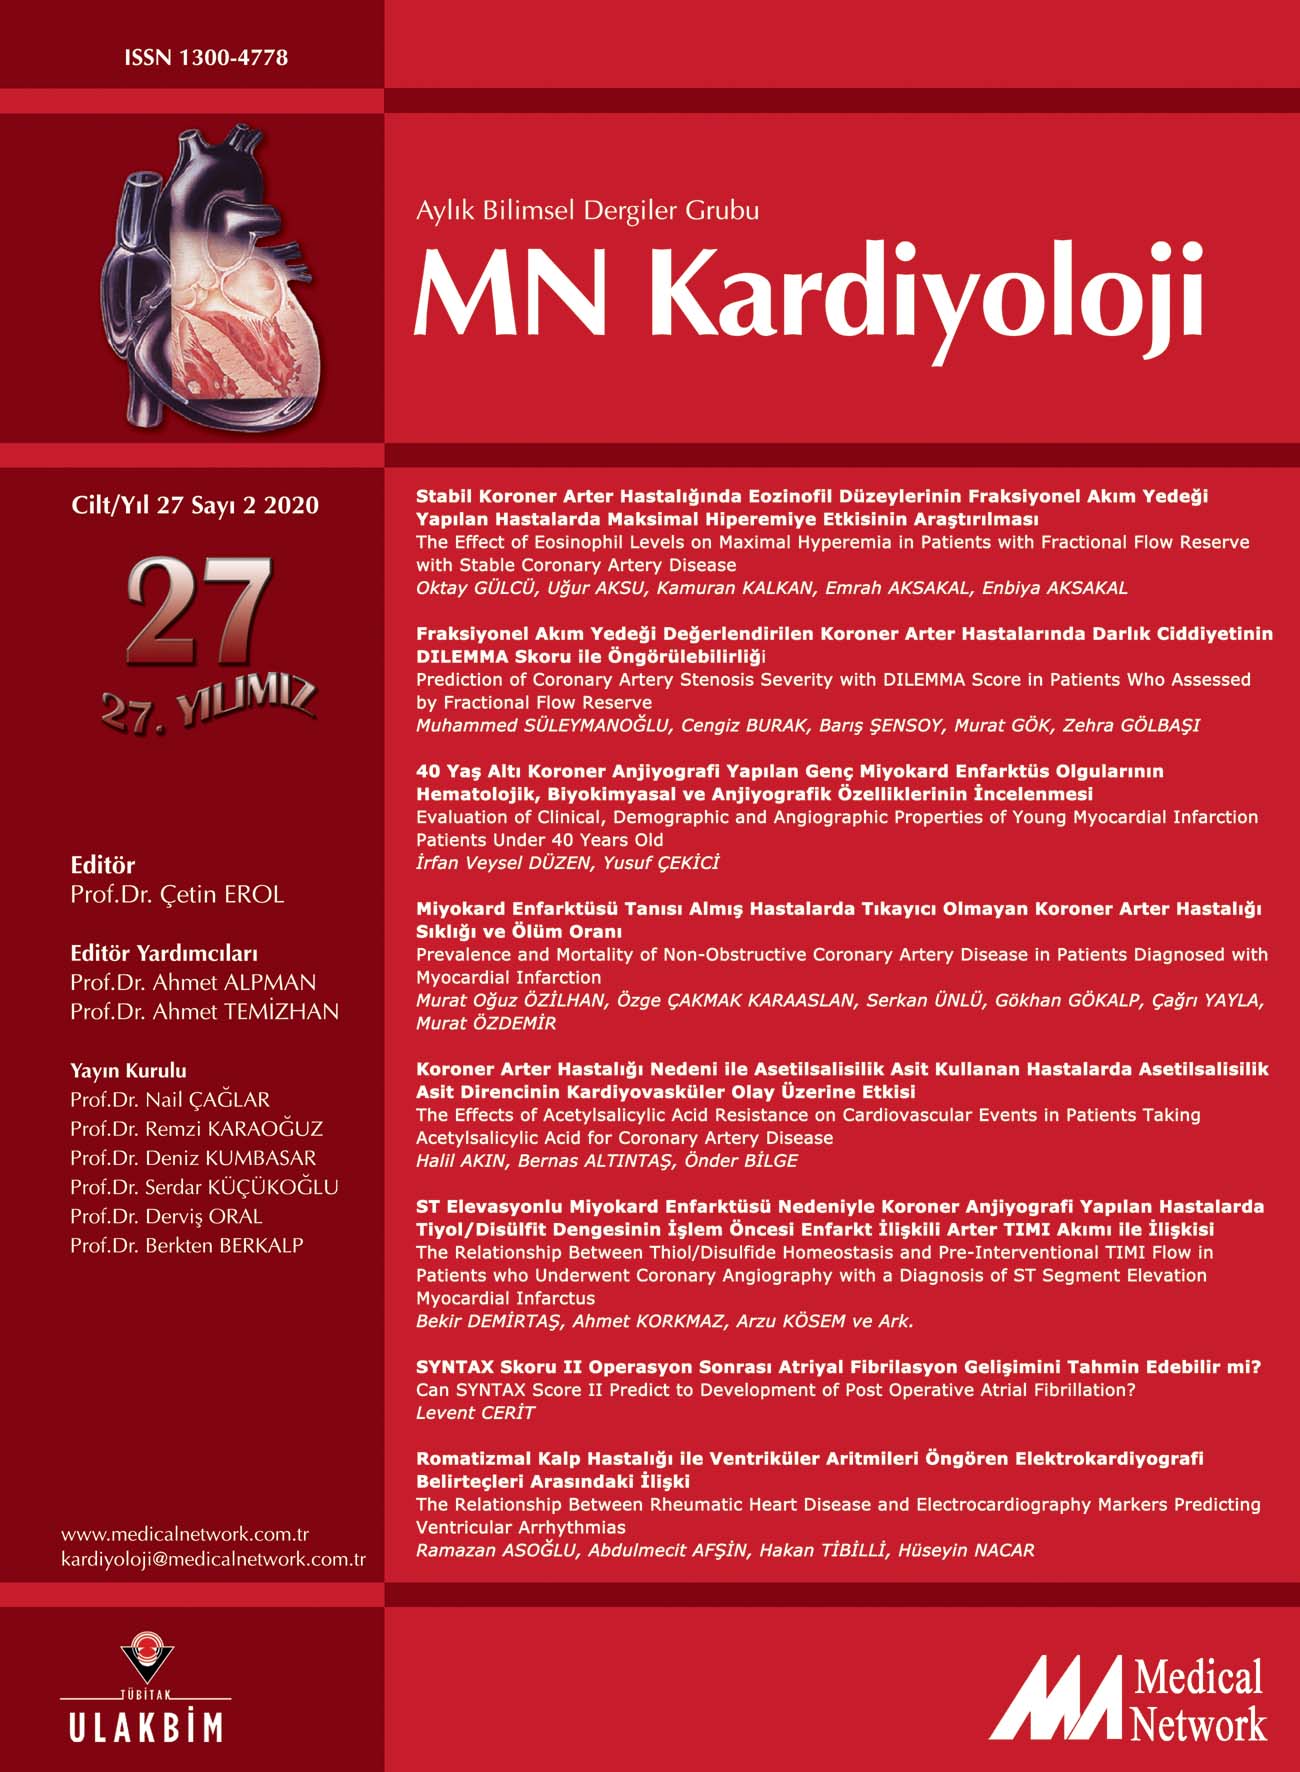 <p>MN Kardiyoloji Cilt: 27 Say: 2 2020 MN Cardiology Volume: 27 No: 2 2020</p>